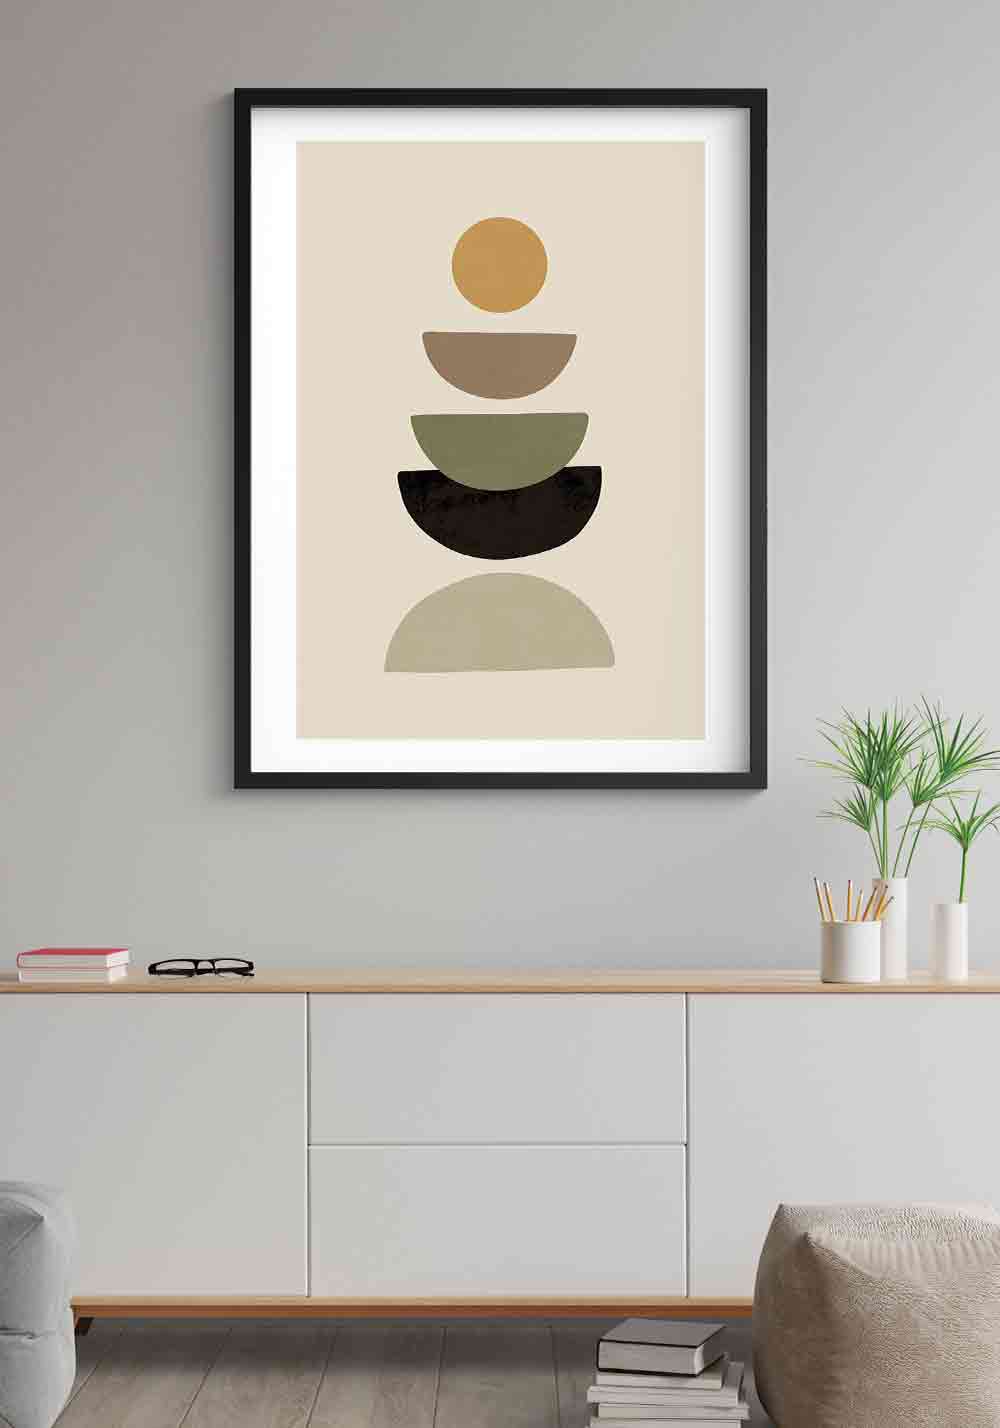 Affiche moderne minimaliste - Poster mural tendance - 3 formes 3